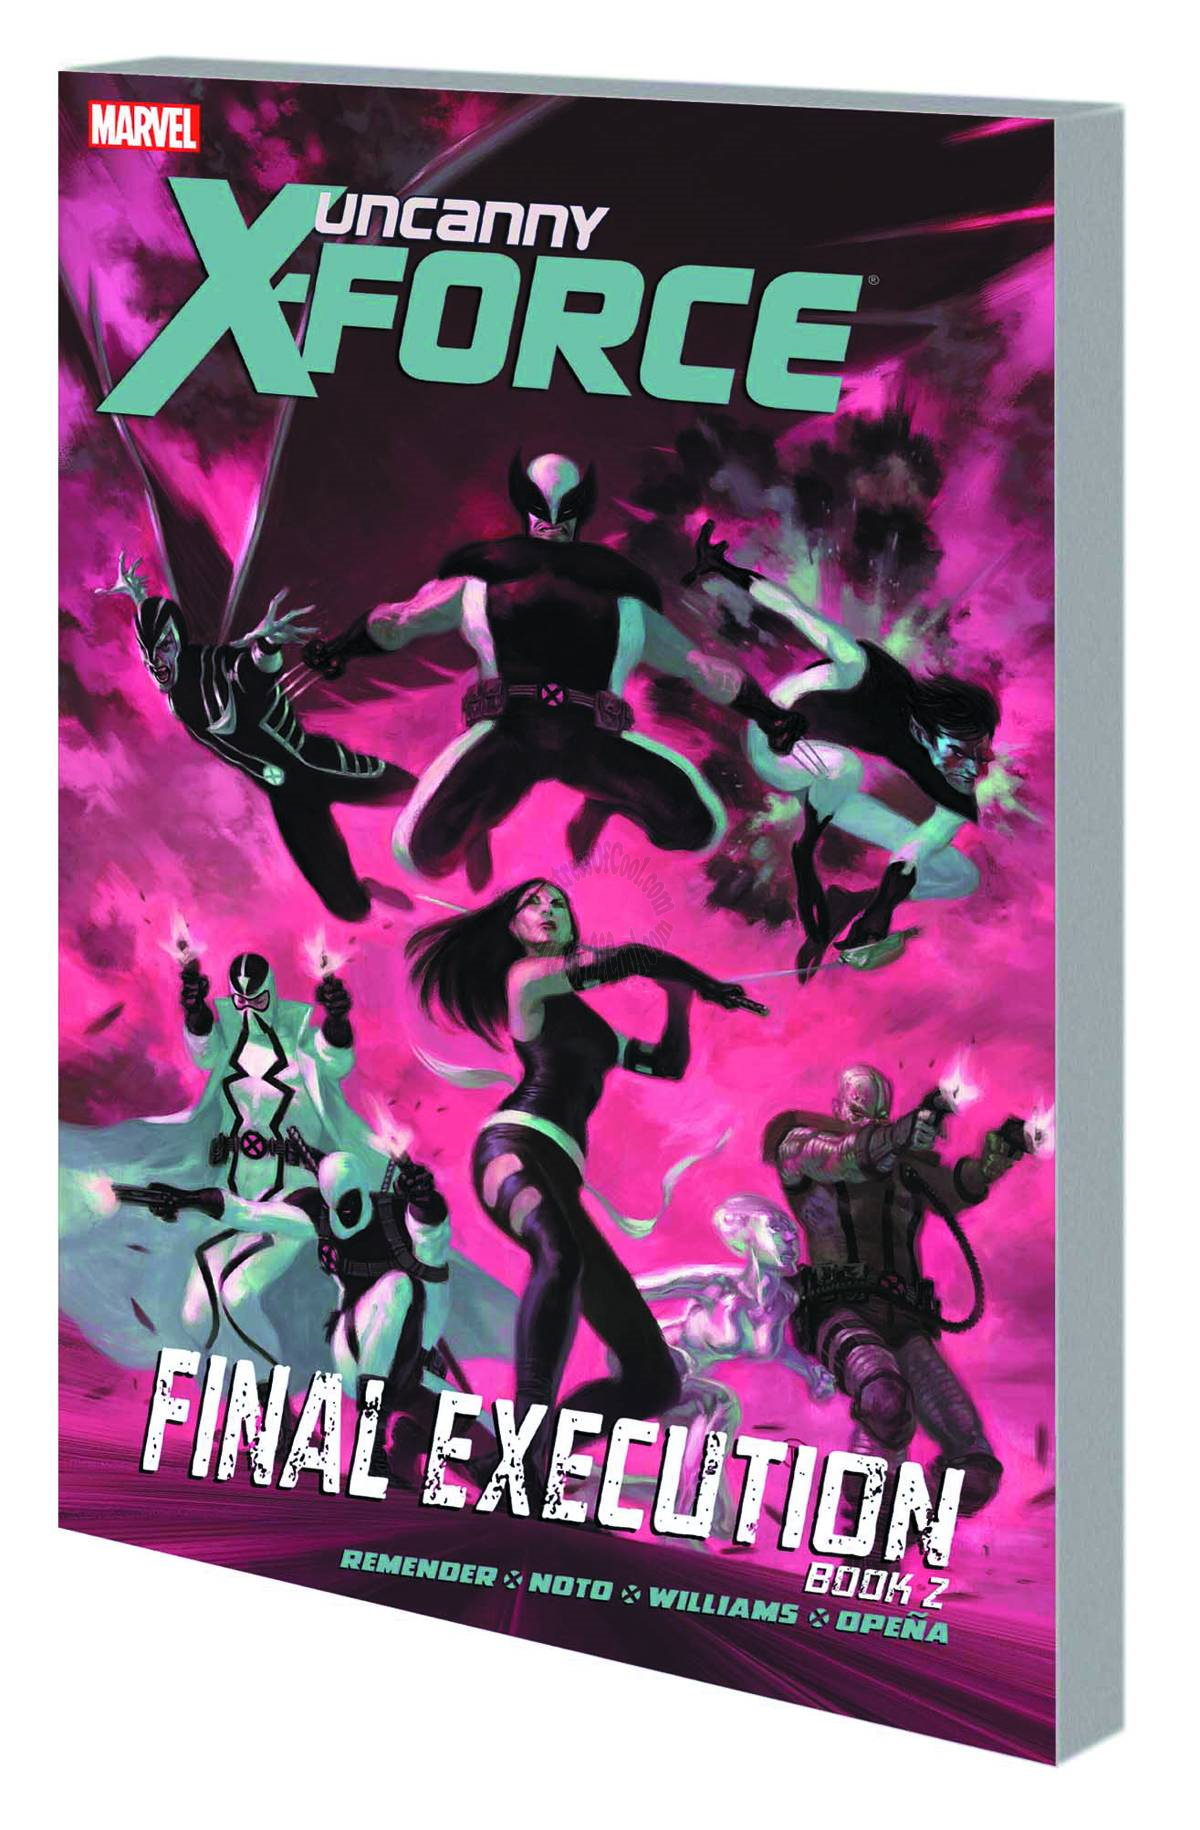 UNCANNY X-FORCE TPB VOL 07 FINAL EXECUTION BOOK 2